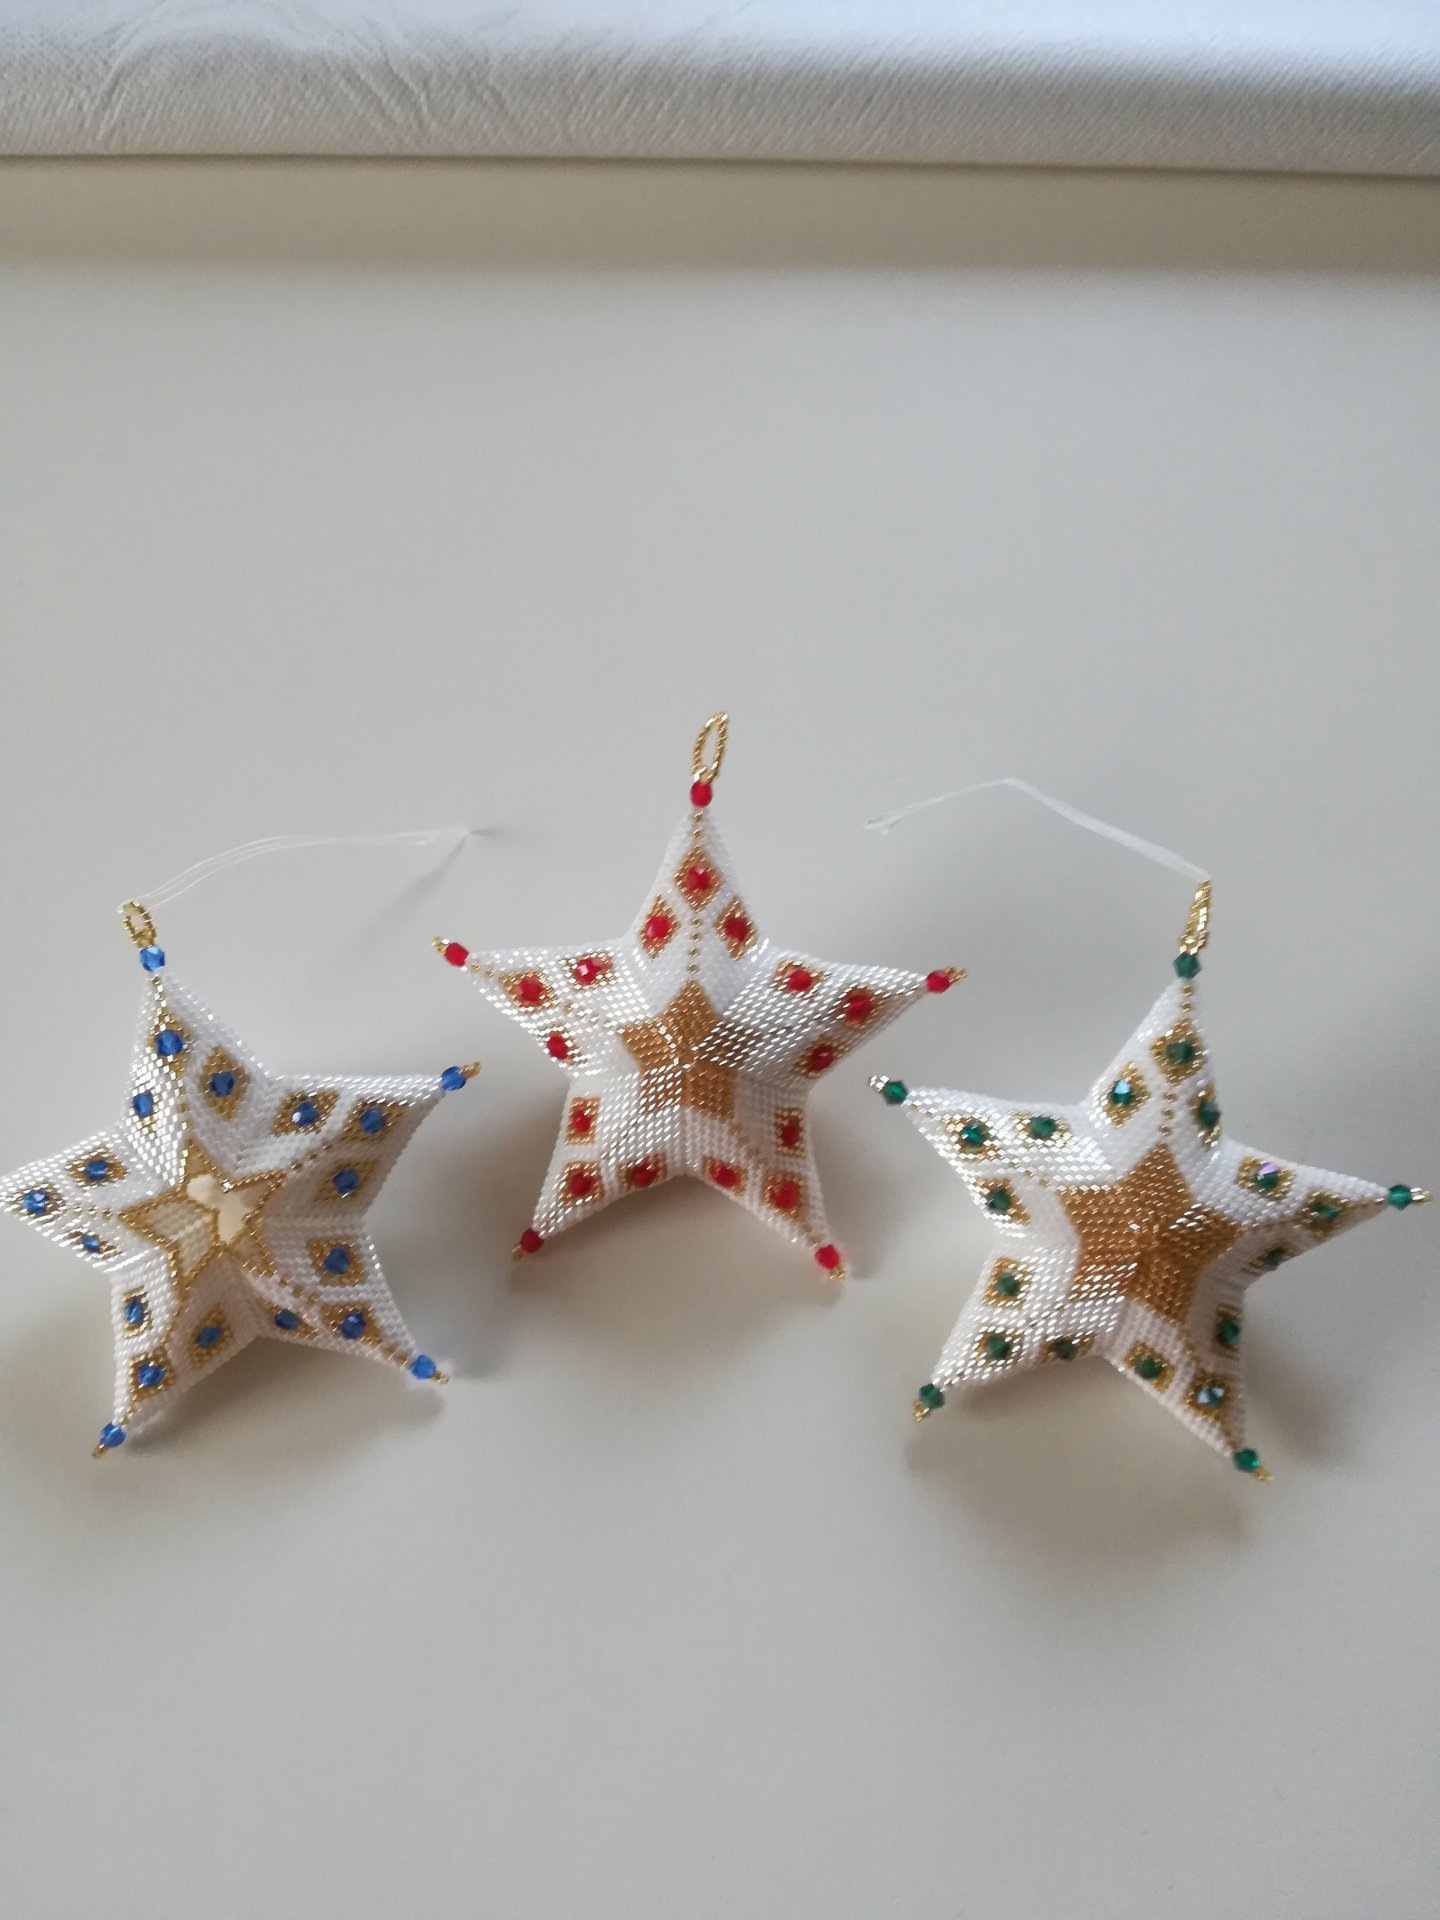 3D Star Ornament PatternTutorial